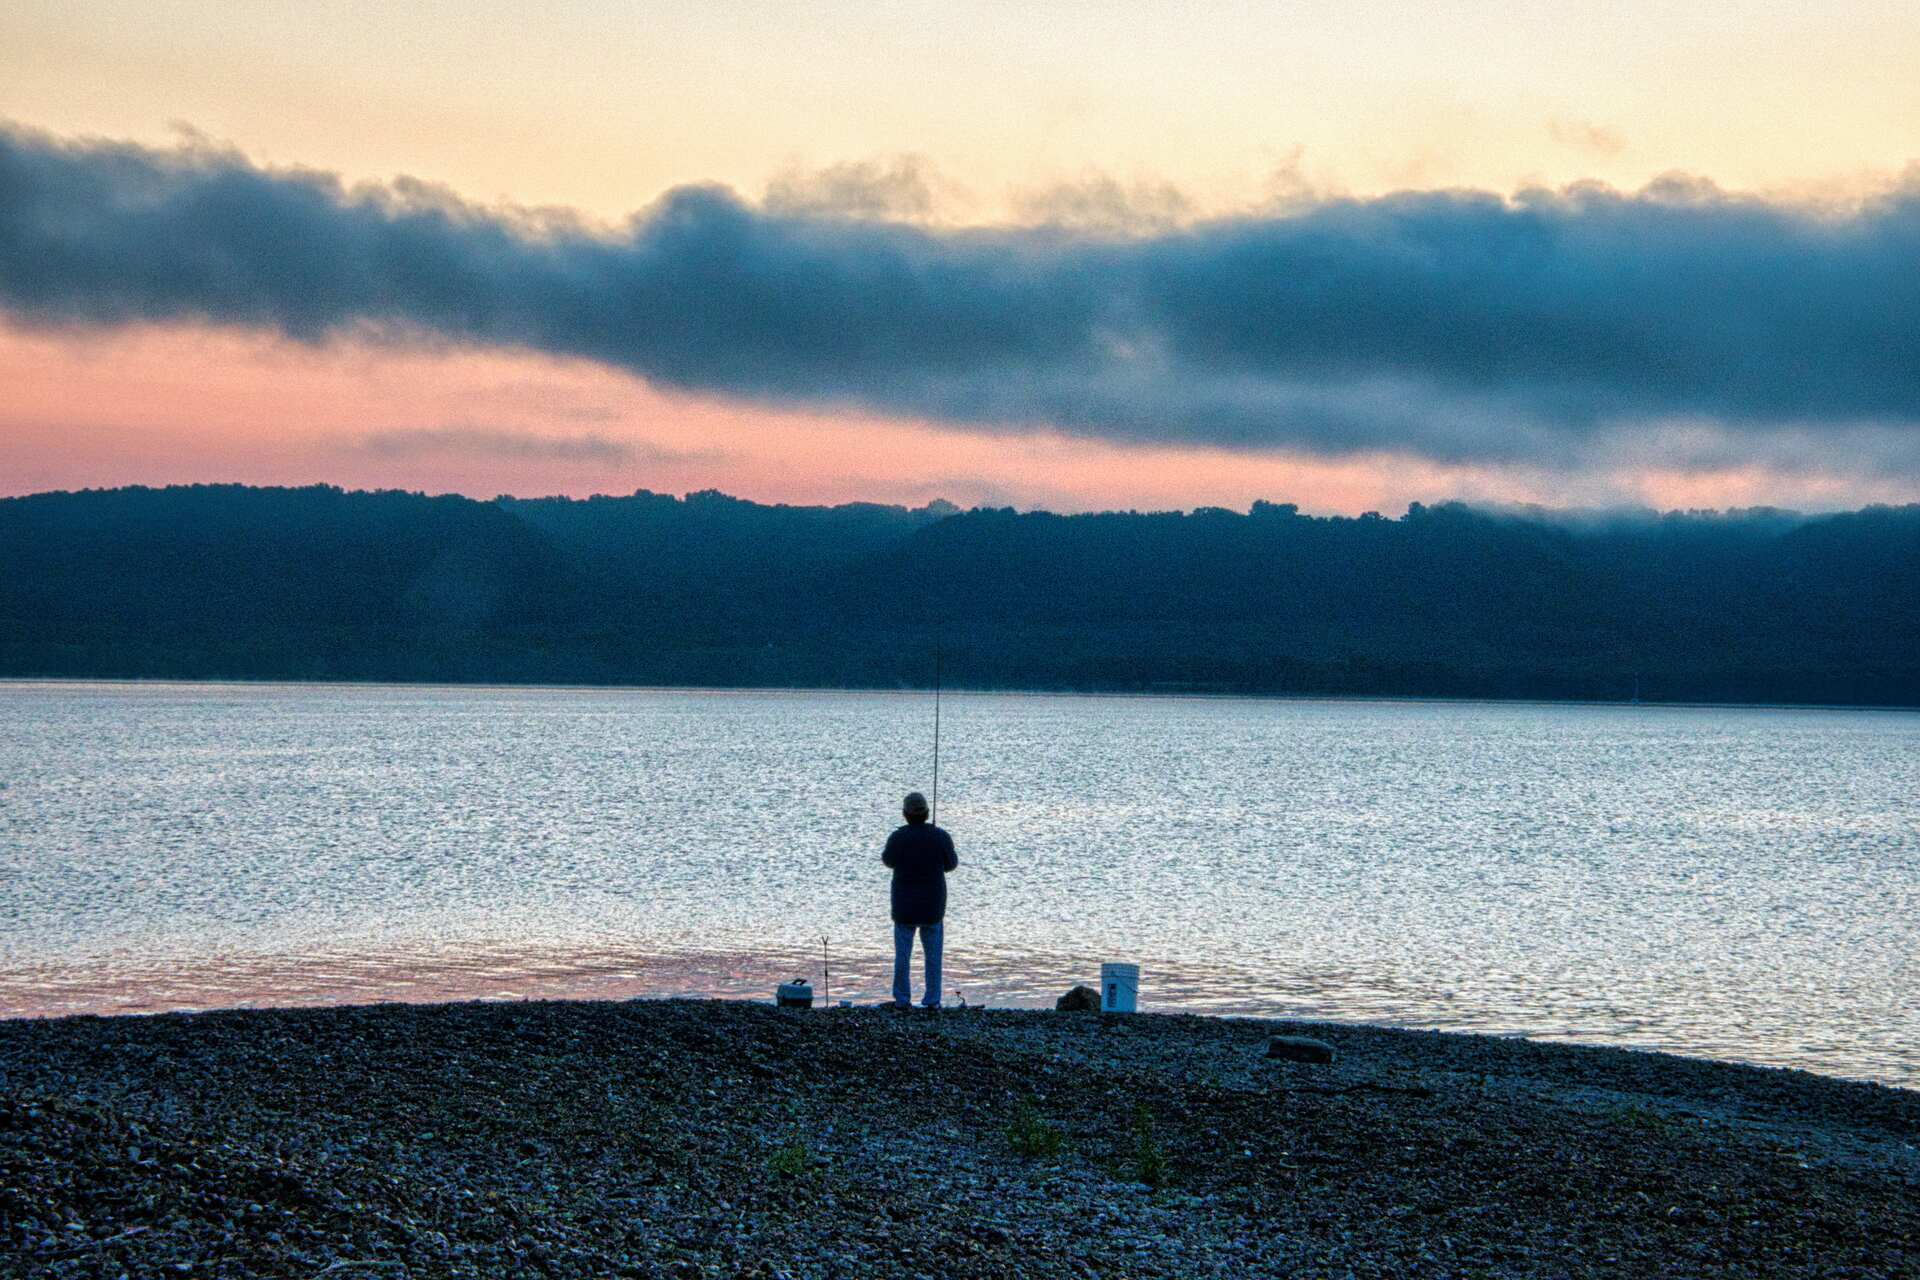 A man fishing on a shoreline